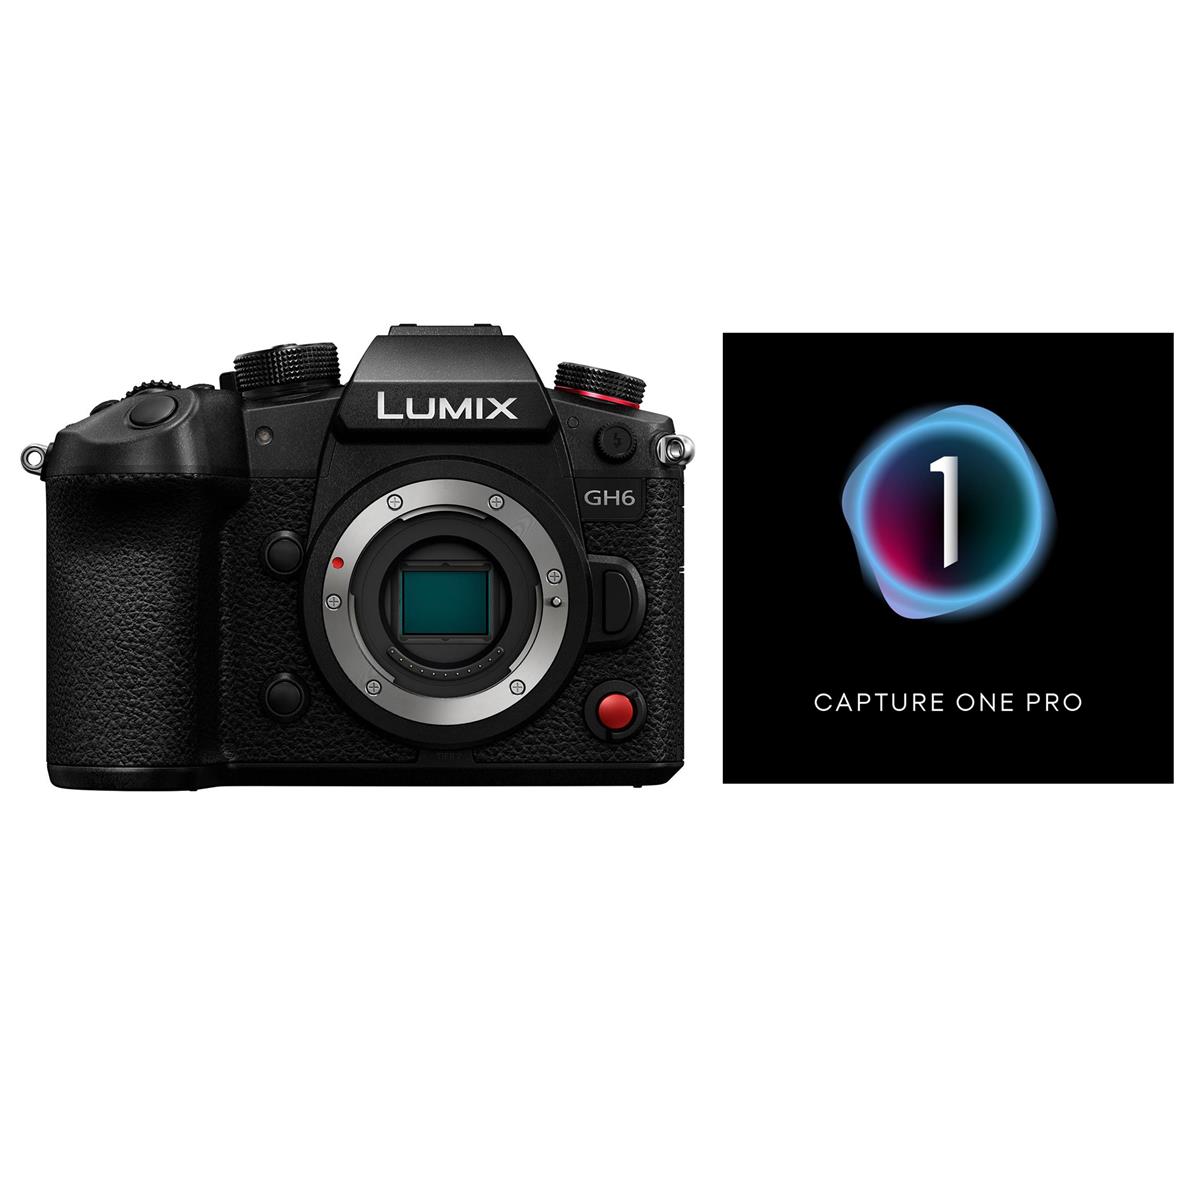 Panasonic Lumix GH6 Mirrorless Camera Body with Capture One Pro